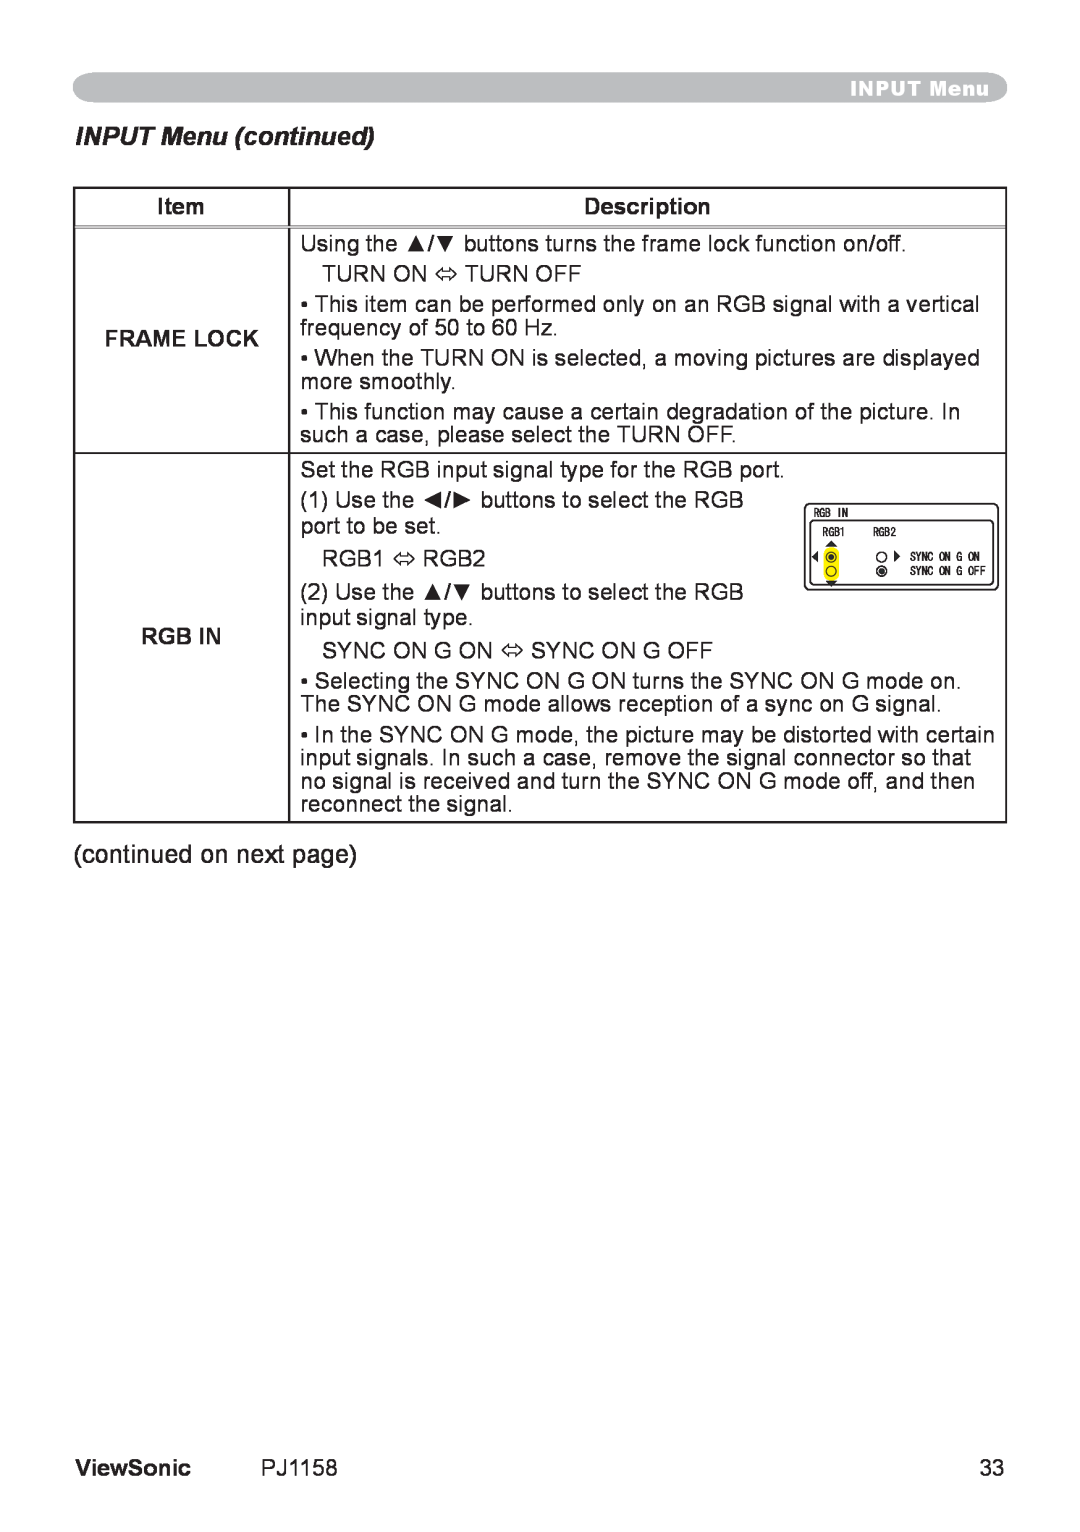 ViewSonic PJ1158 manual INPUT Menu continued, Item, Description, Frame Lock, Rgb In, ViewSonic 